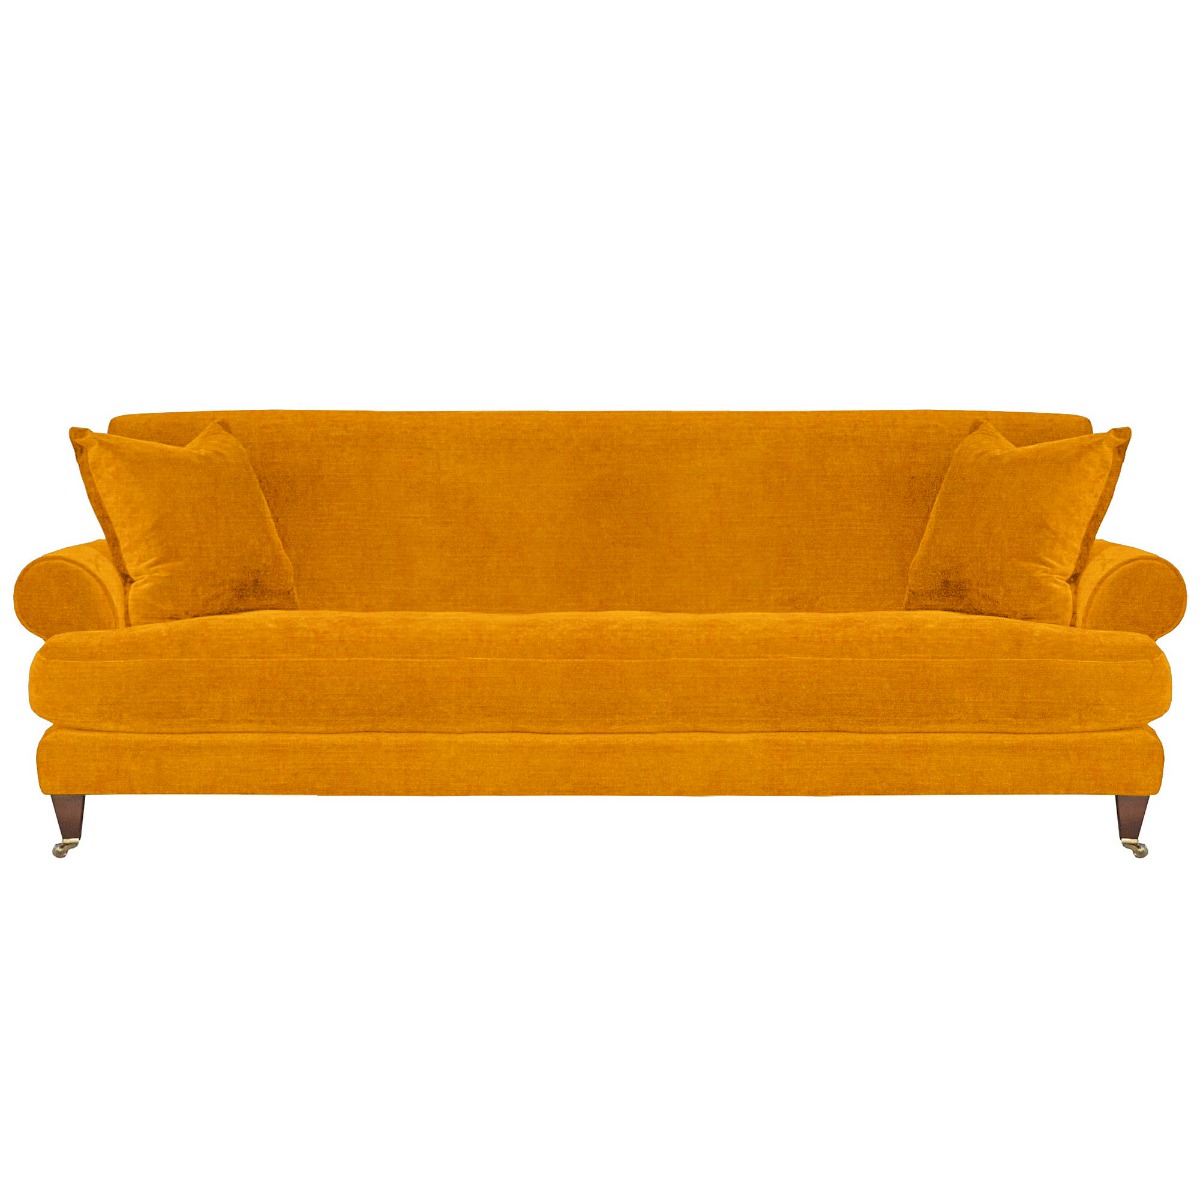 Fairlawn 4 Seater Sofa, Yellow Fabric | Barker & Stonehouse